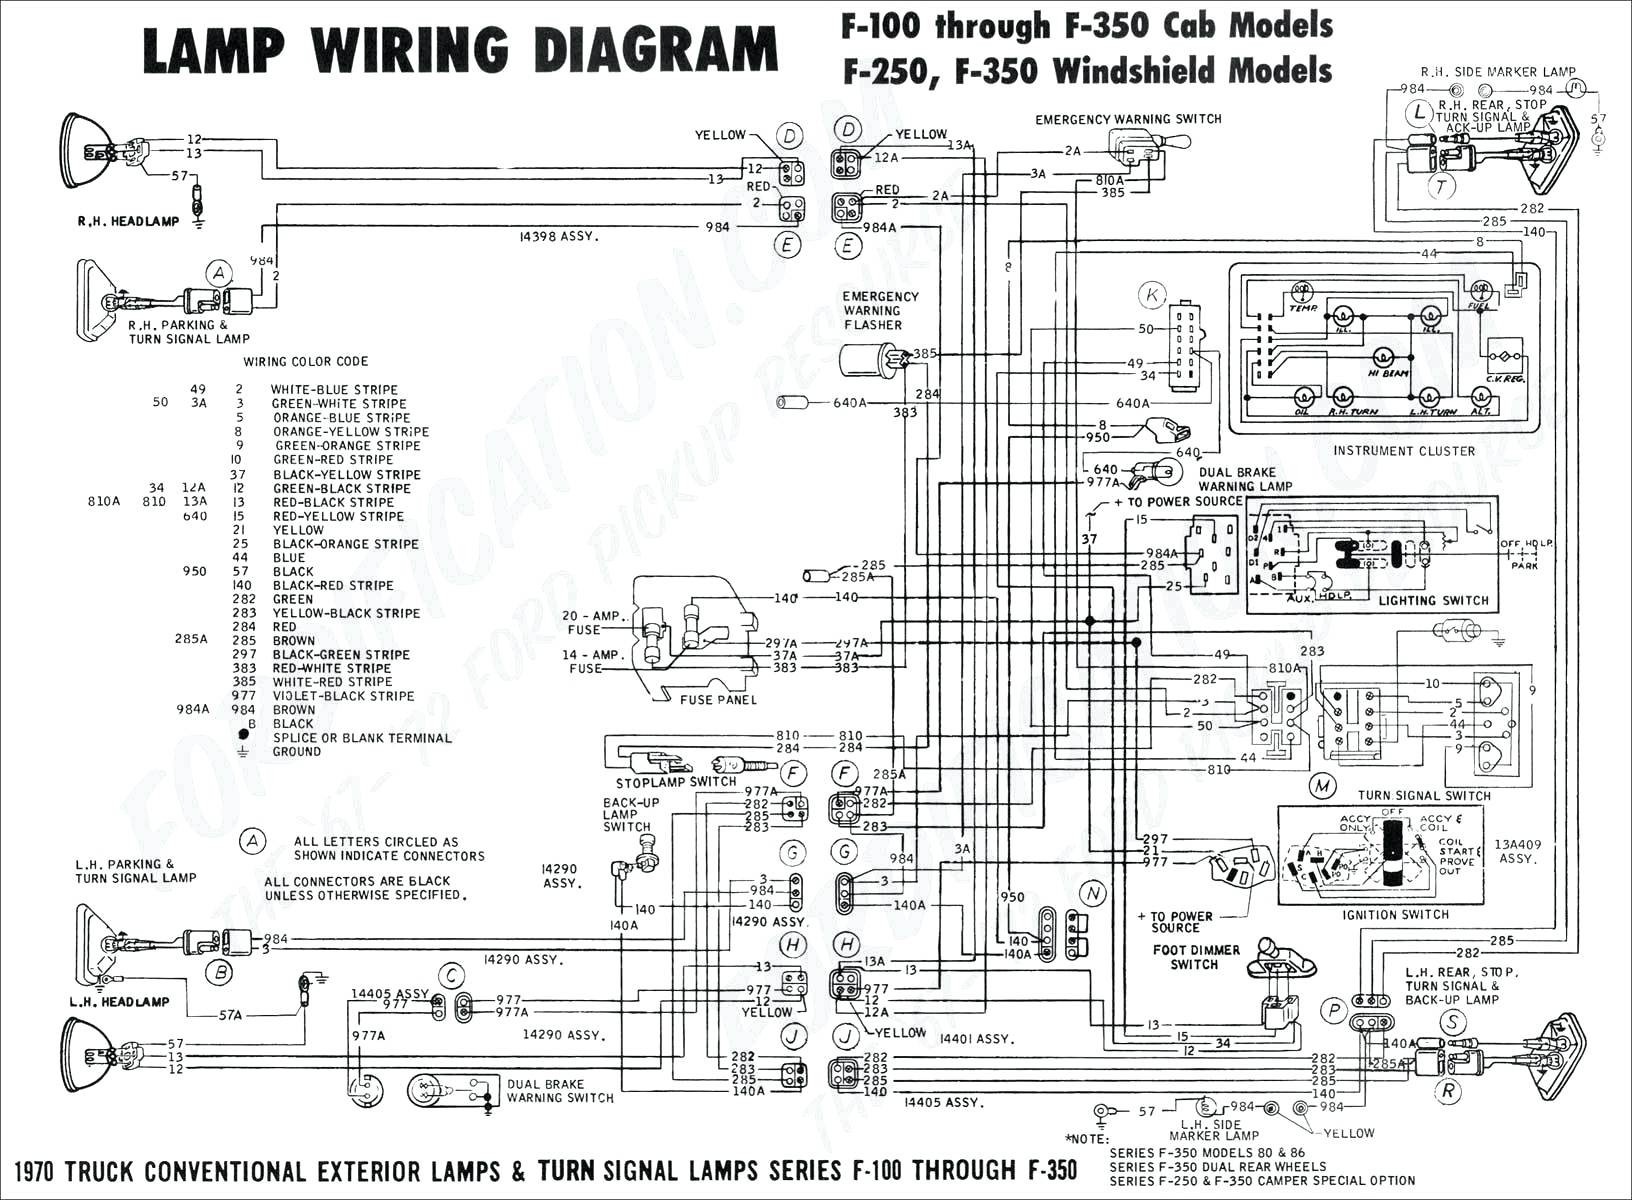 2001 Honda Accord V6 Engine Diagram 95 Honda Accord Engine Diagram Of 2001 Honda Accord V6 Engine Diagram